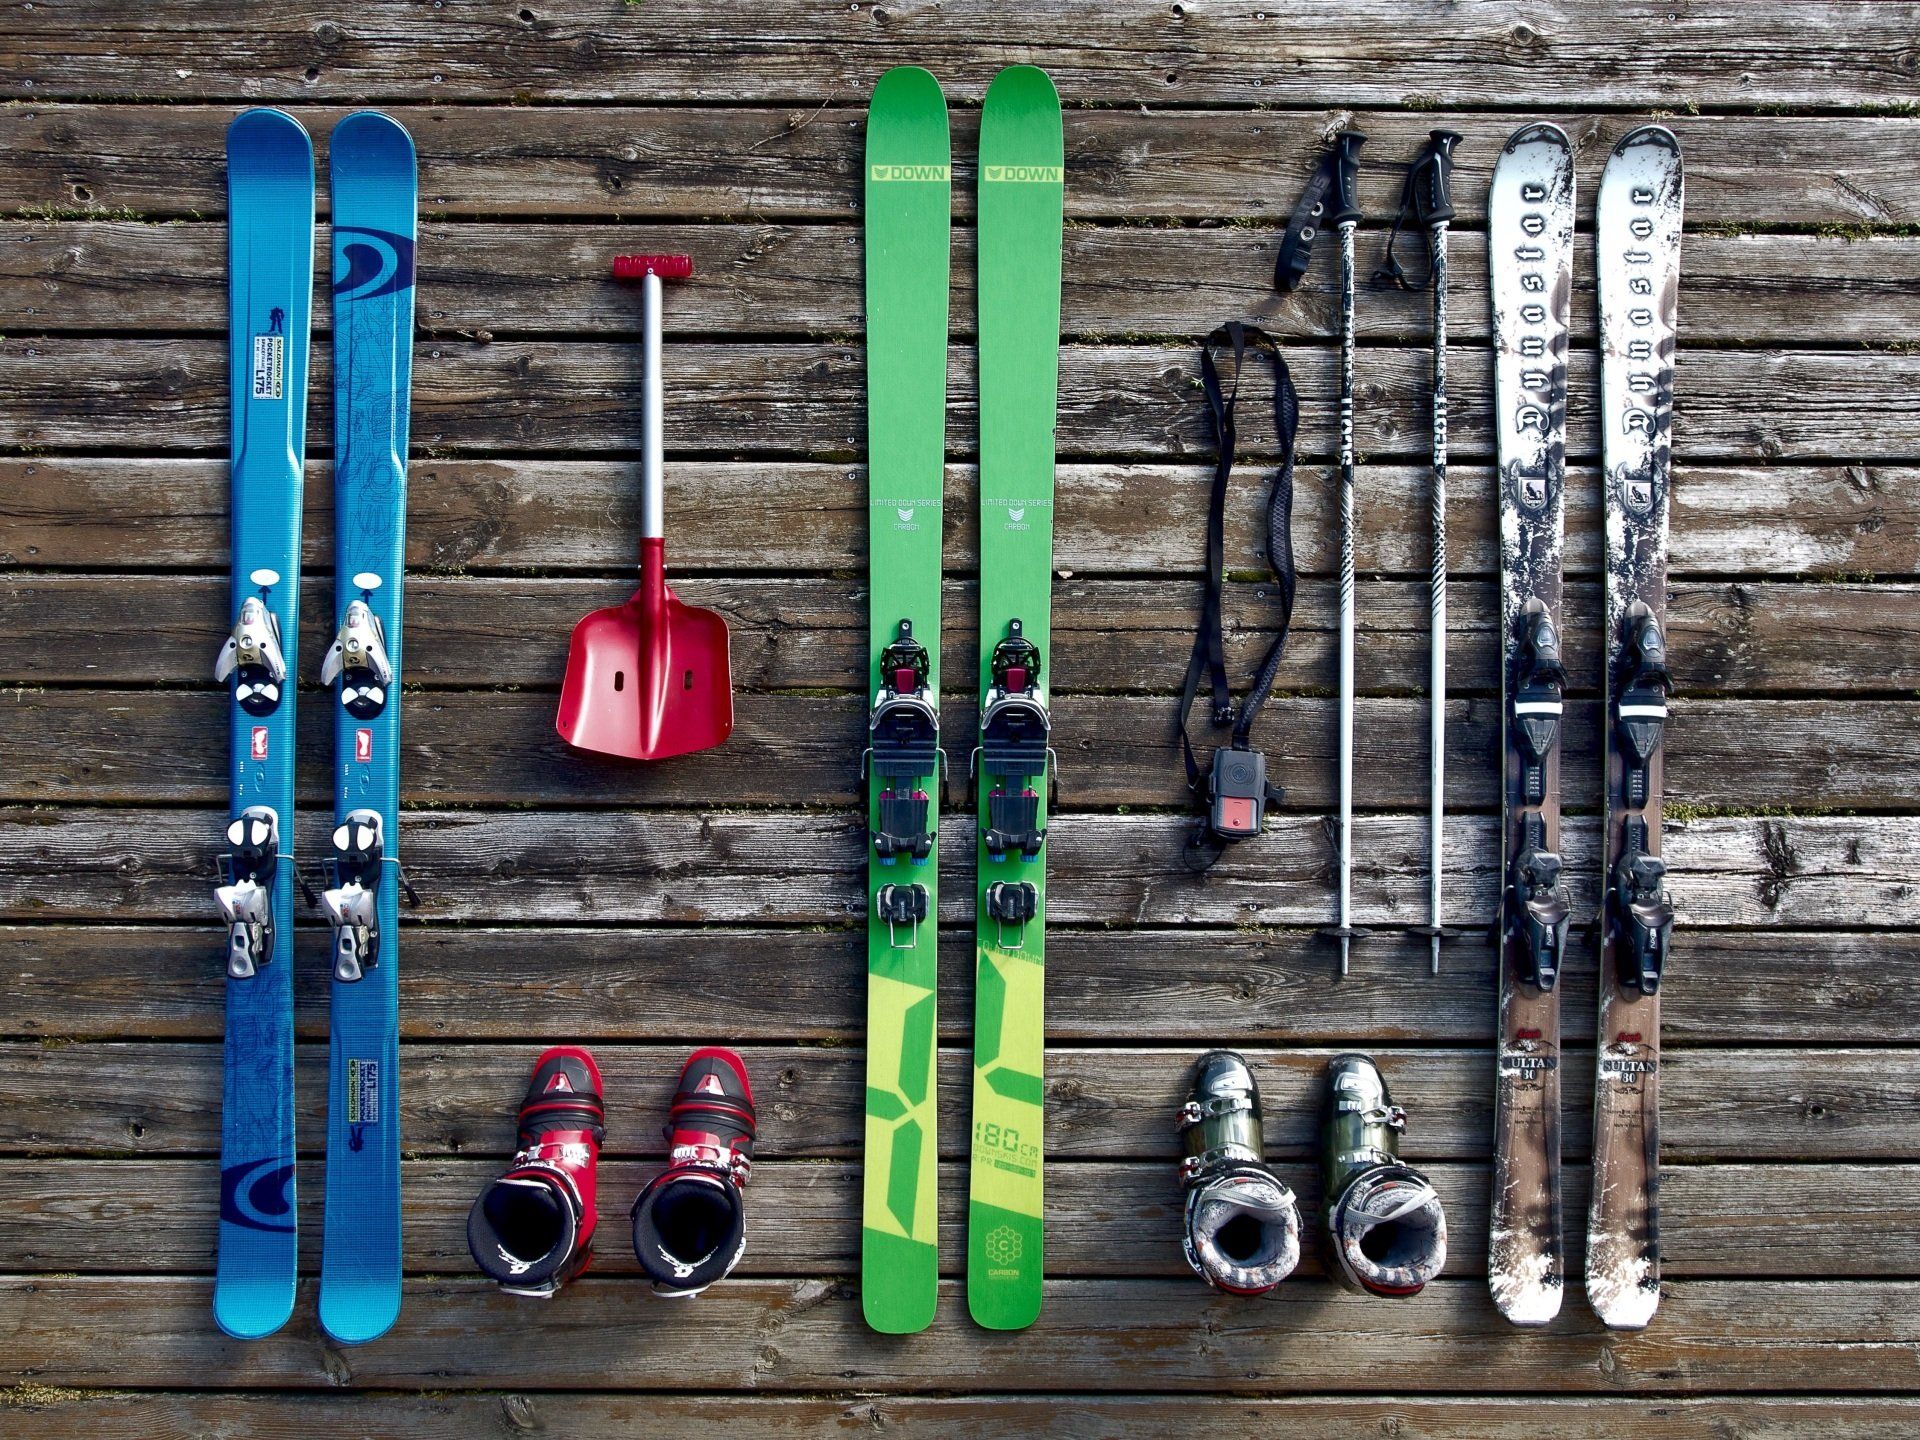 Wood Table with Ski Gear - Ski Holidays Barter's Travelnet